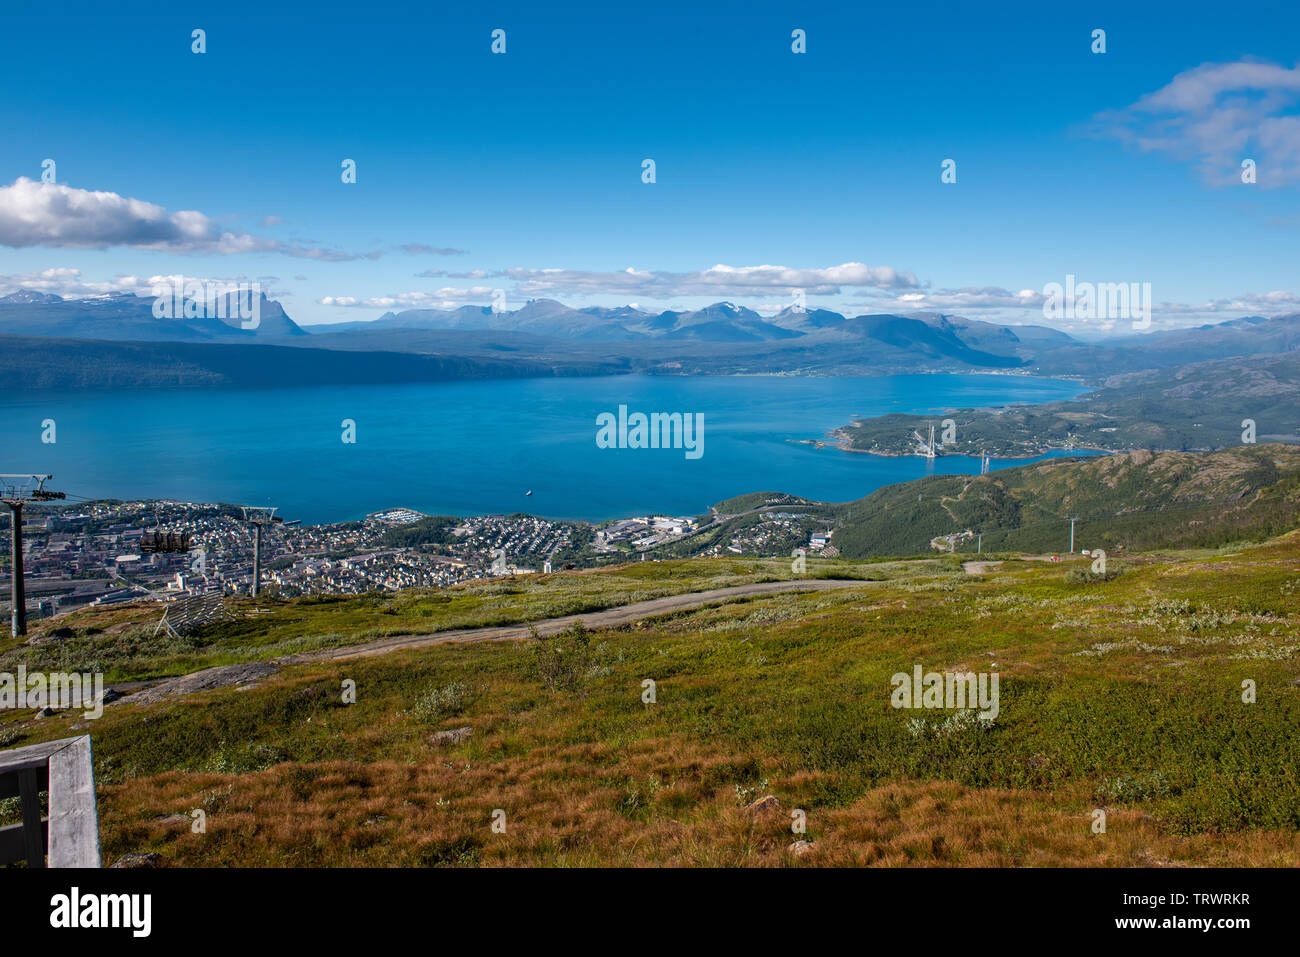 Landschaft von Narvikfjellet in Narvik in Norwegen/Skandinavien - Blick auf Ofotfjord Stockfoto